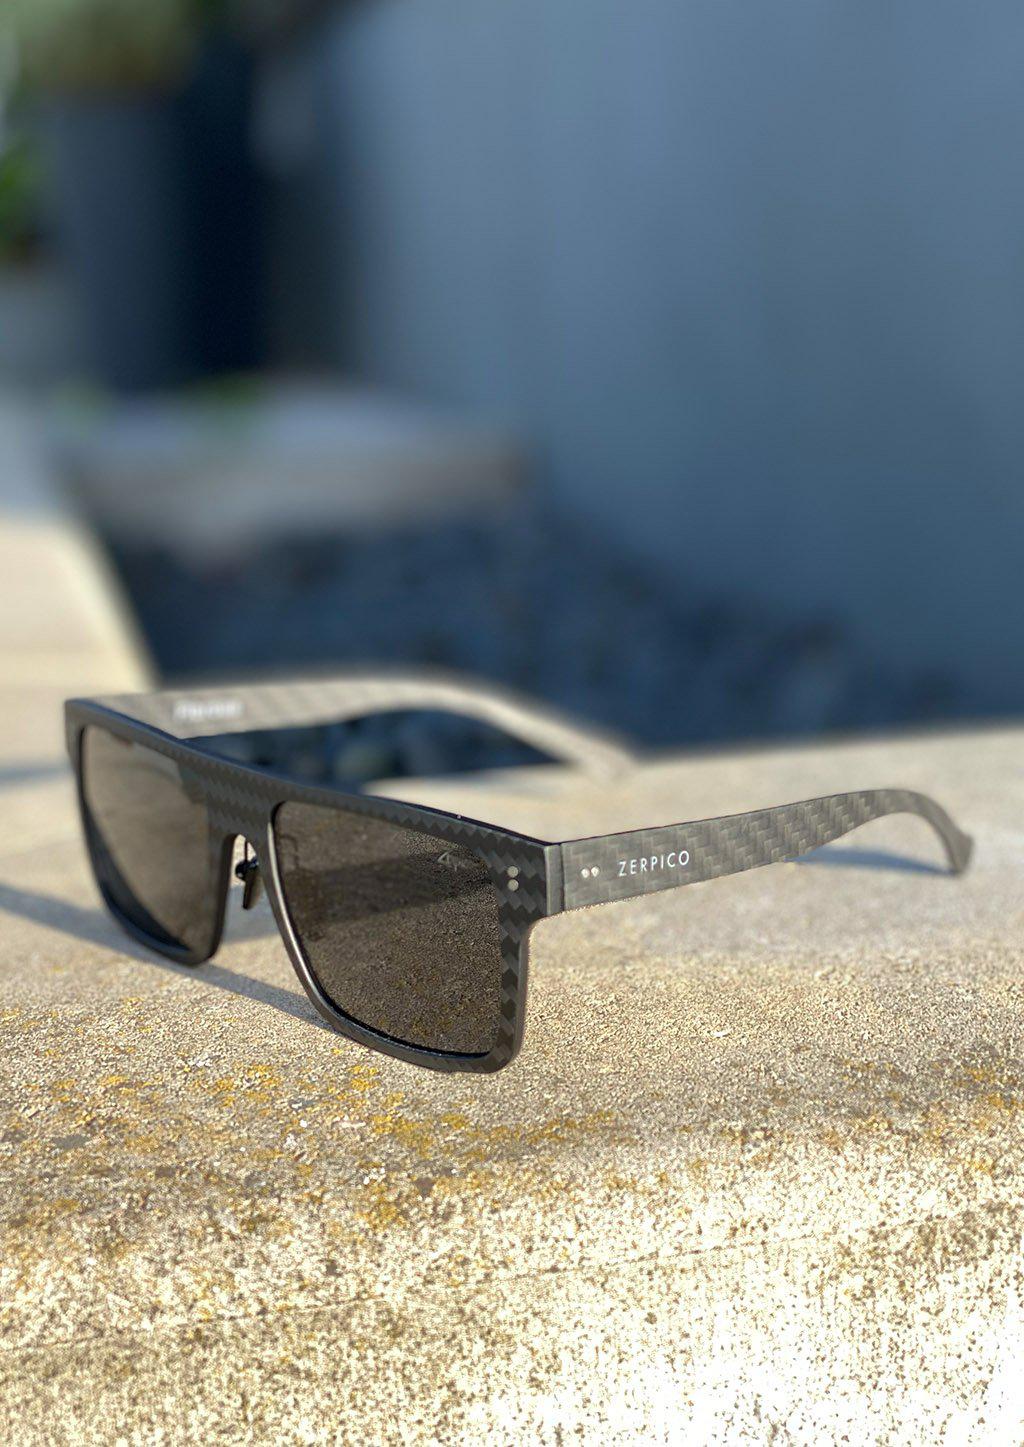 Carbon Fiber Square Sunglasses photo taken outside in the Swedish summer.